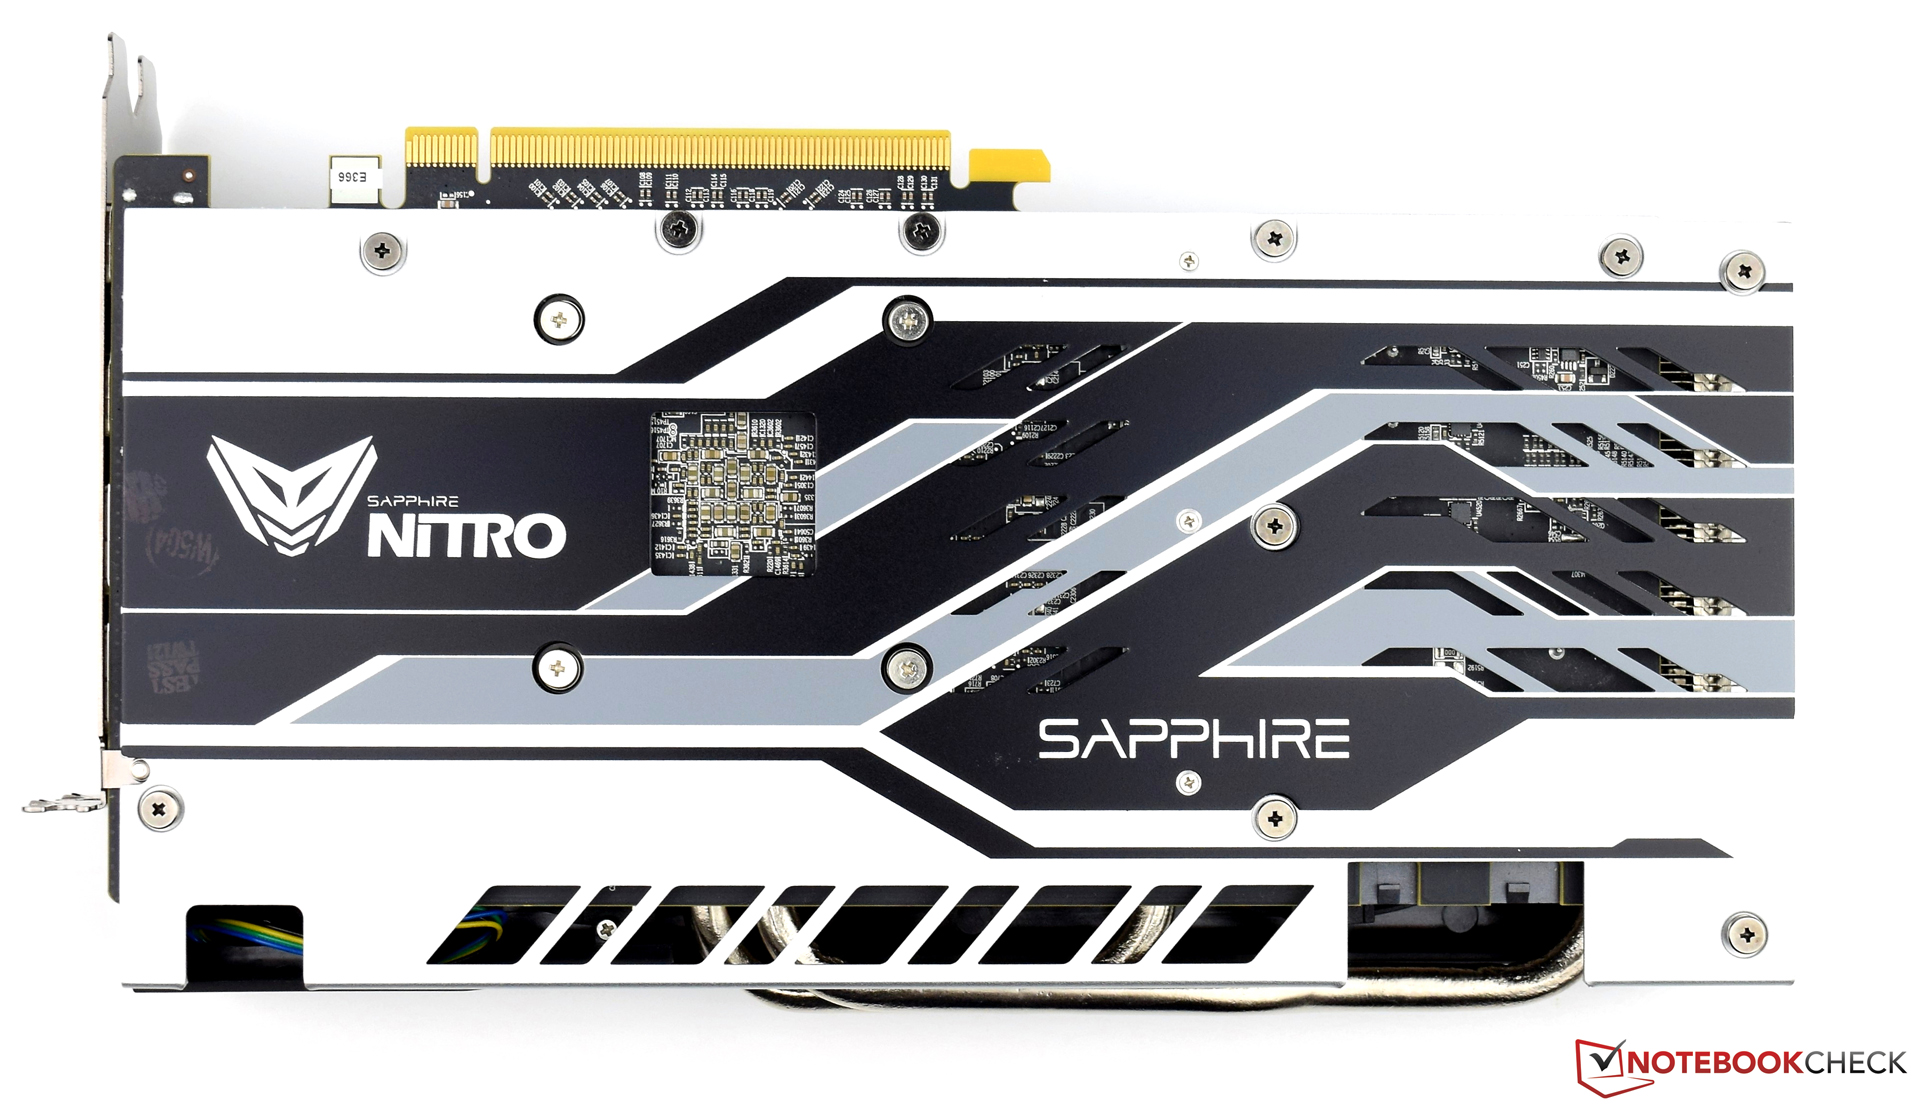 Sapphire Nitro Radeon Rx 580 Desktop Graphics Card Review Notebookcheck Net Reviews